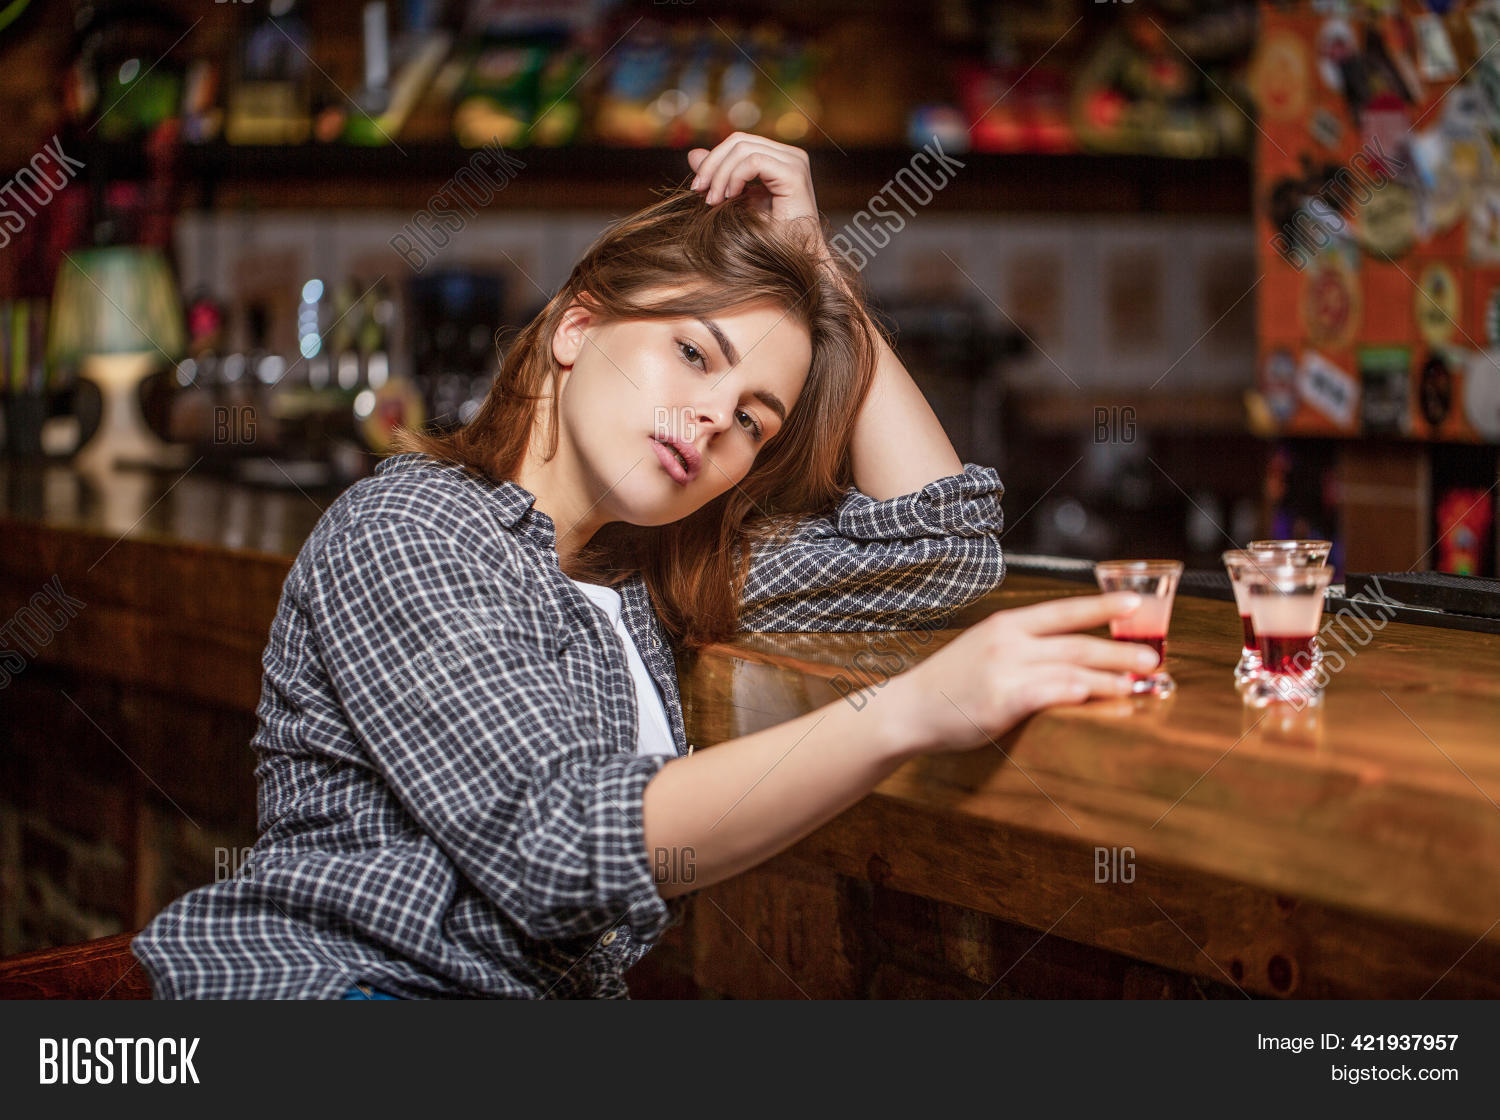 debbie fleenor add photo picture of a drunk girl